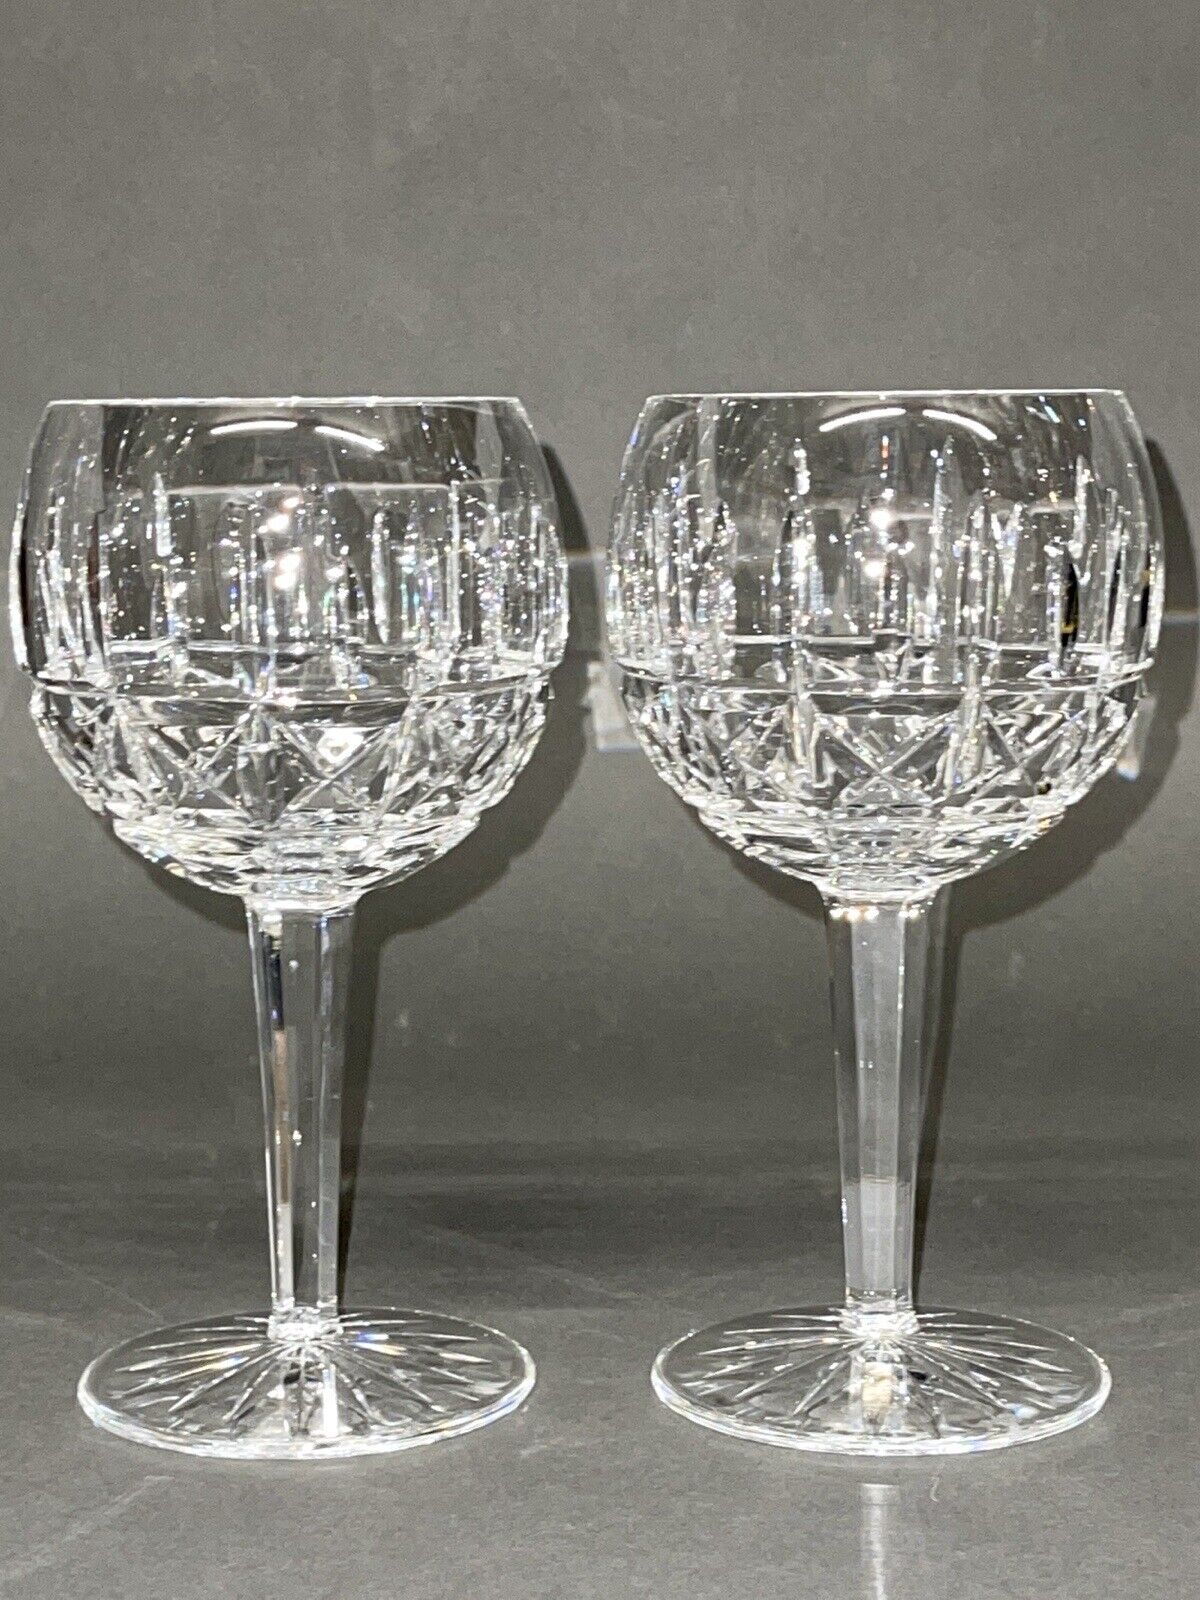 Stunning a Pair of 16 Oz Vintage Waterford Crystal kylemore Balloon Wine Glasses